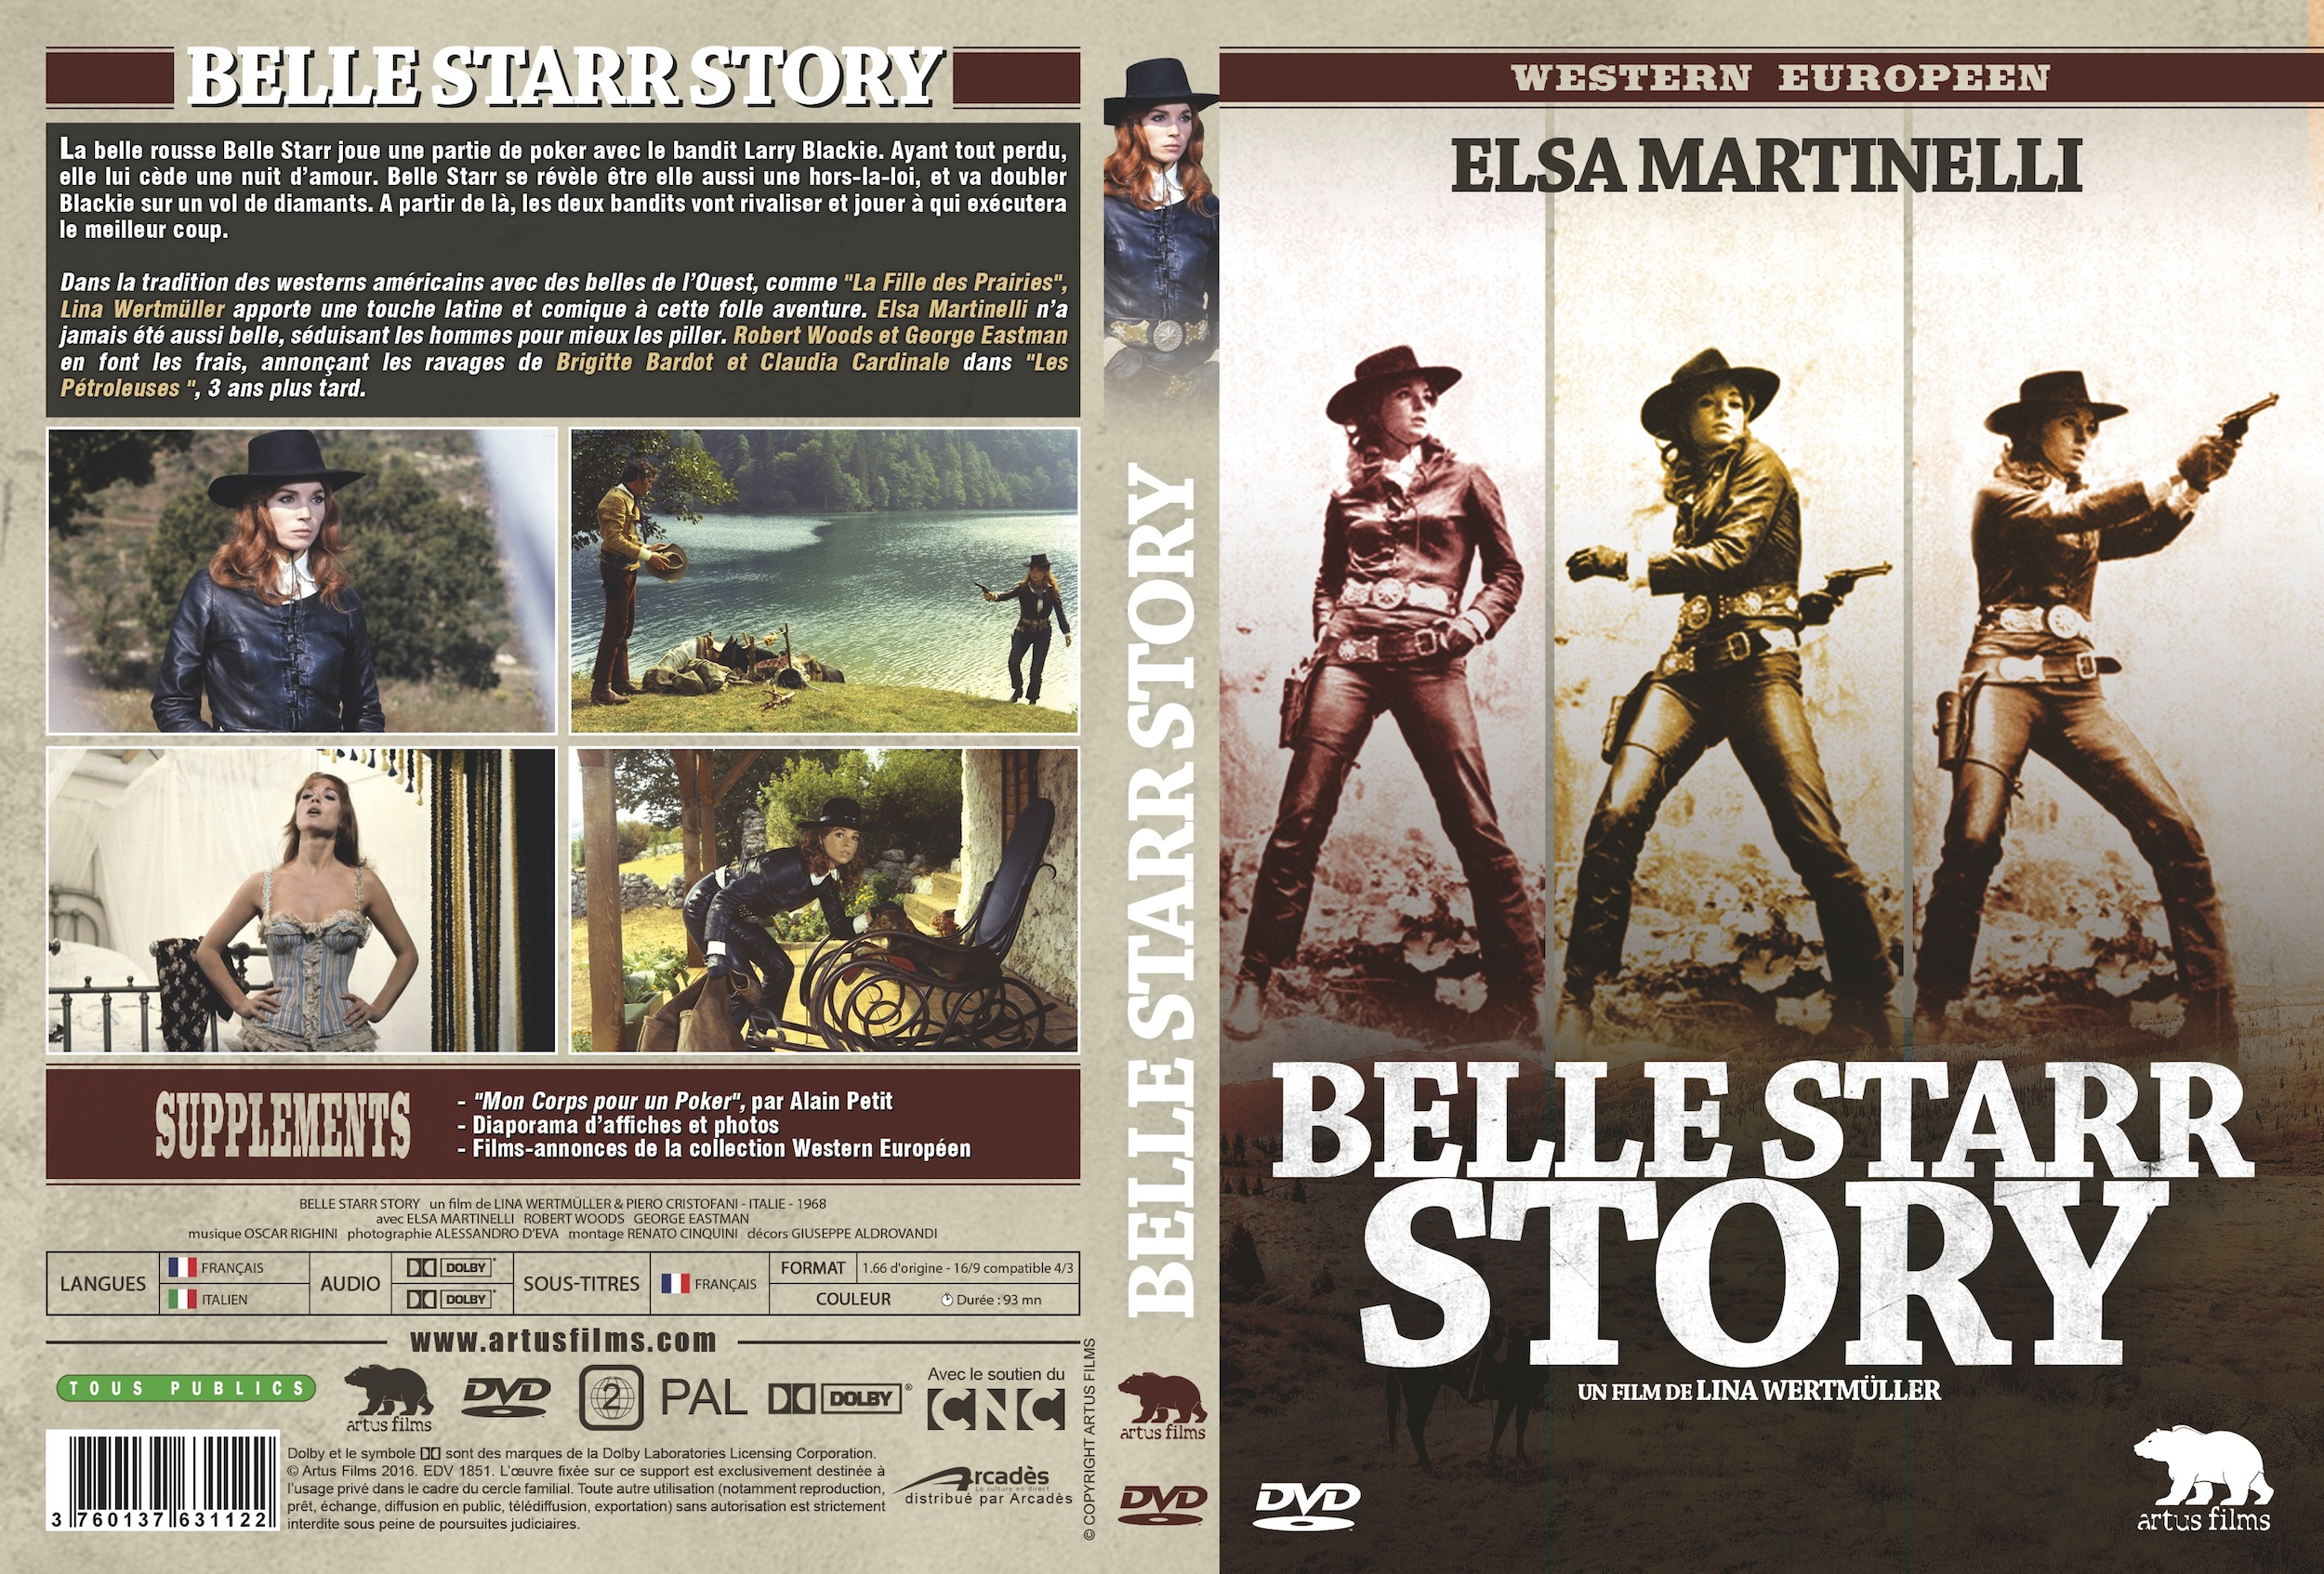 Jaquette DVD Belle starr story